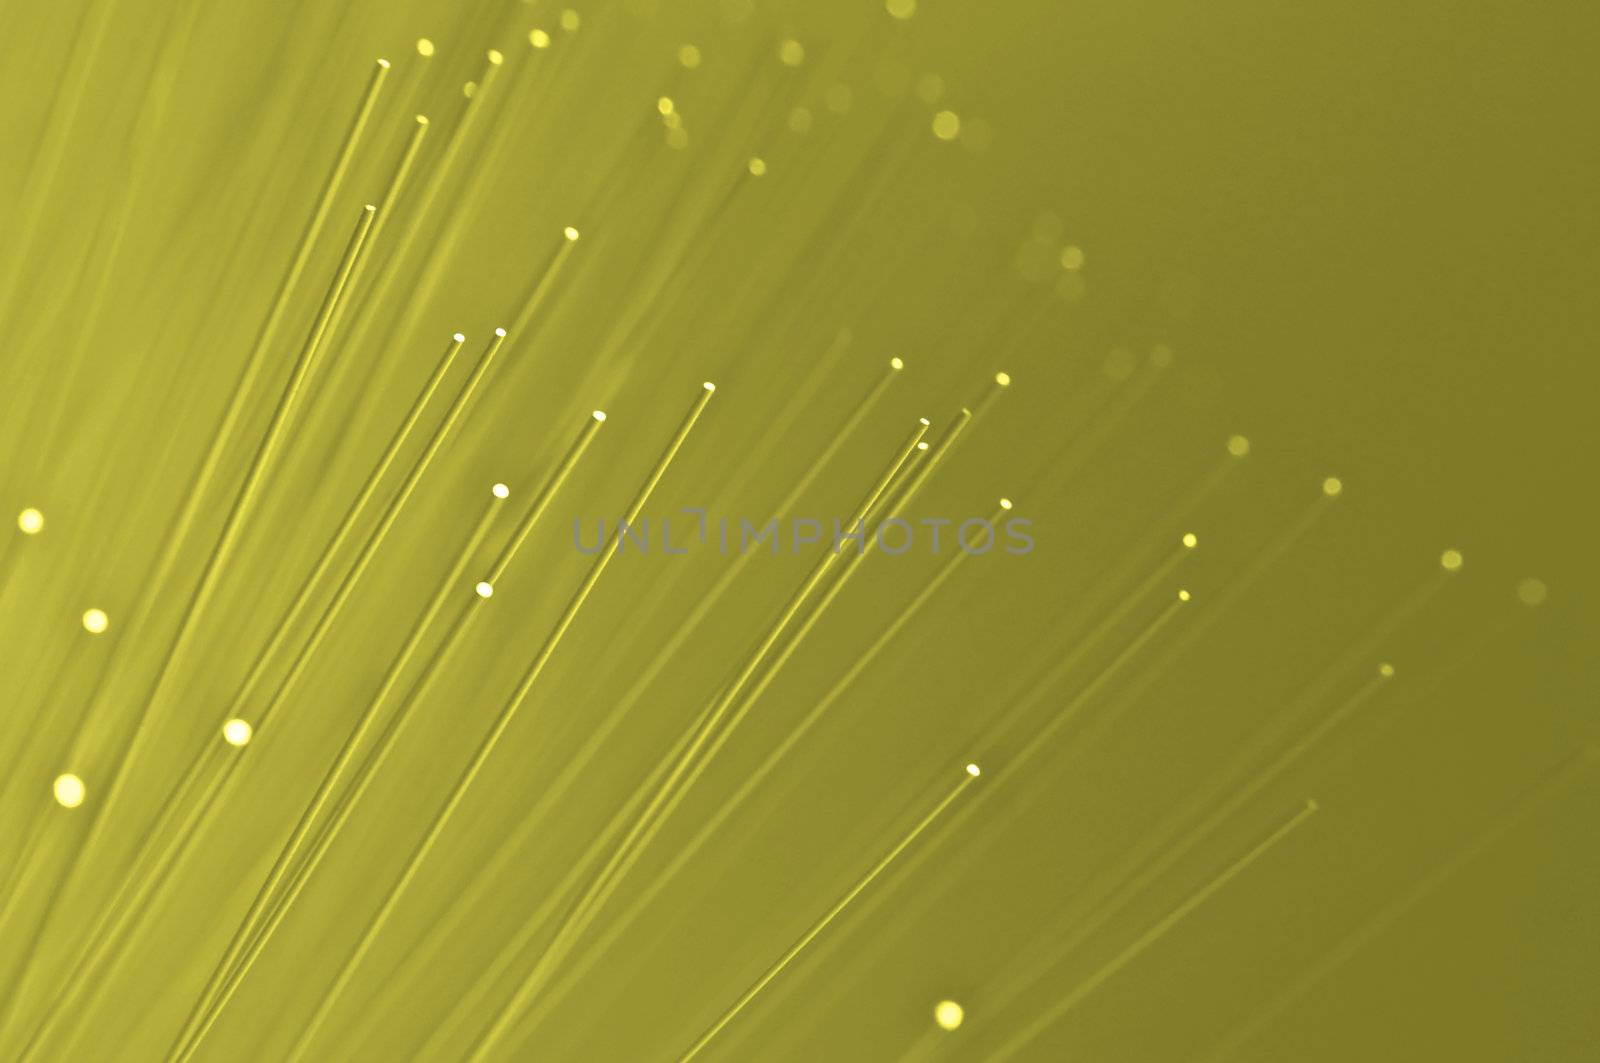 Many ends of yellow illuminated fiber optic light strands close up